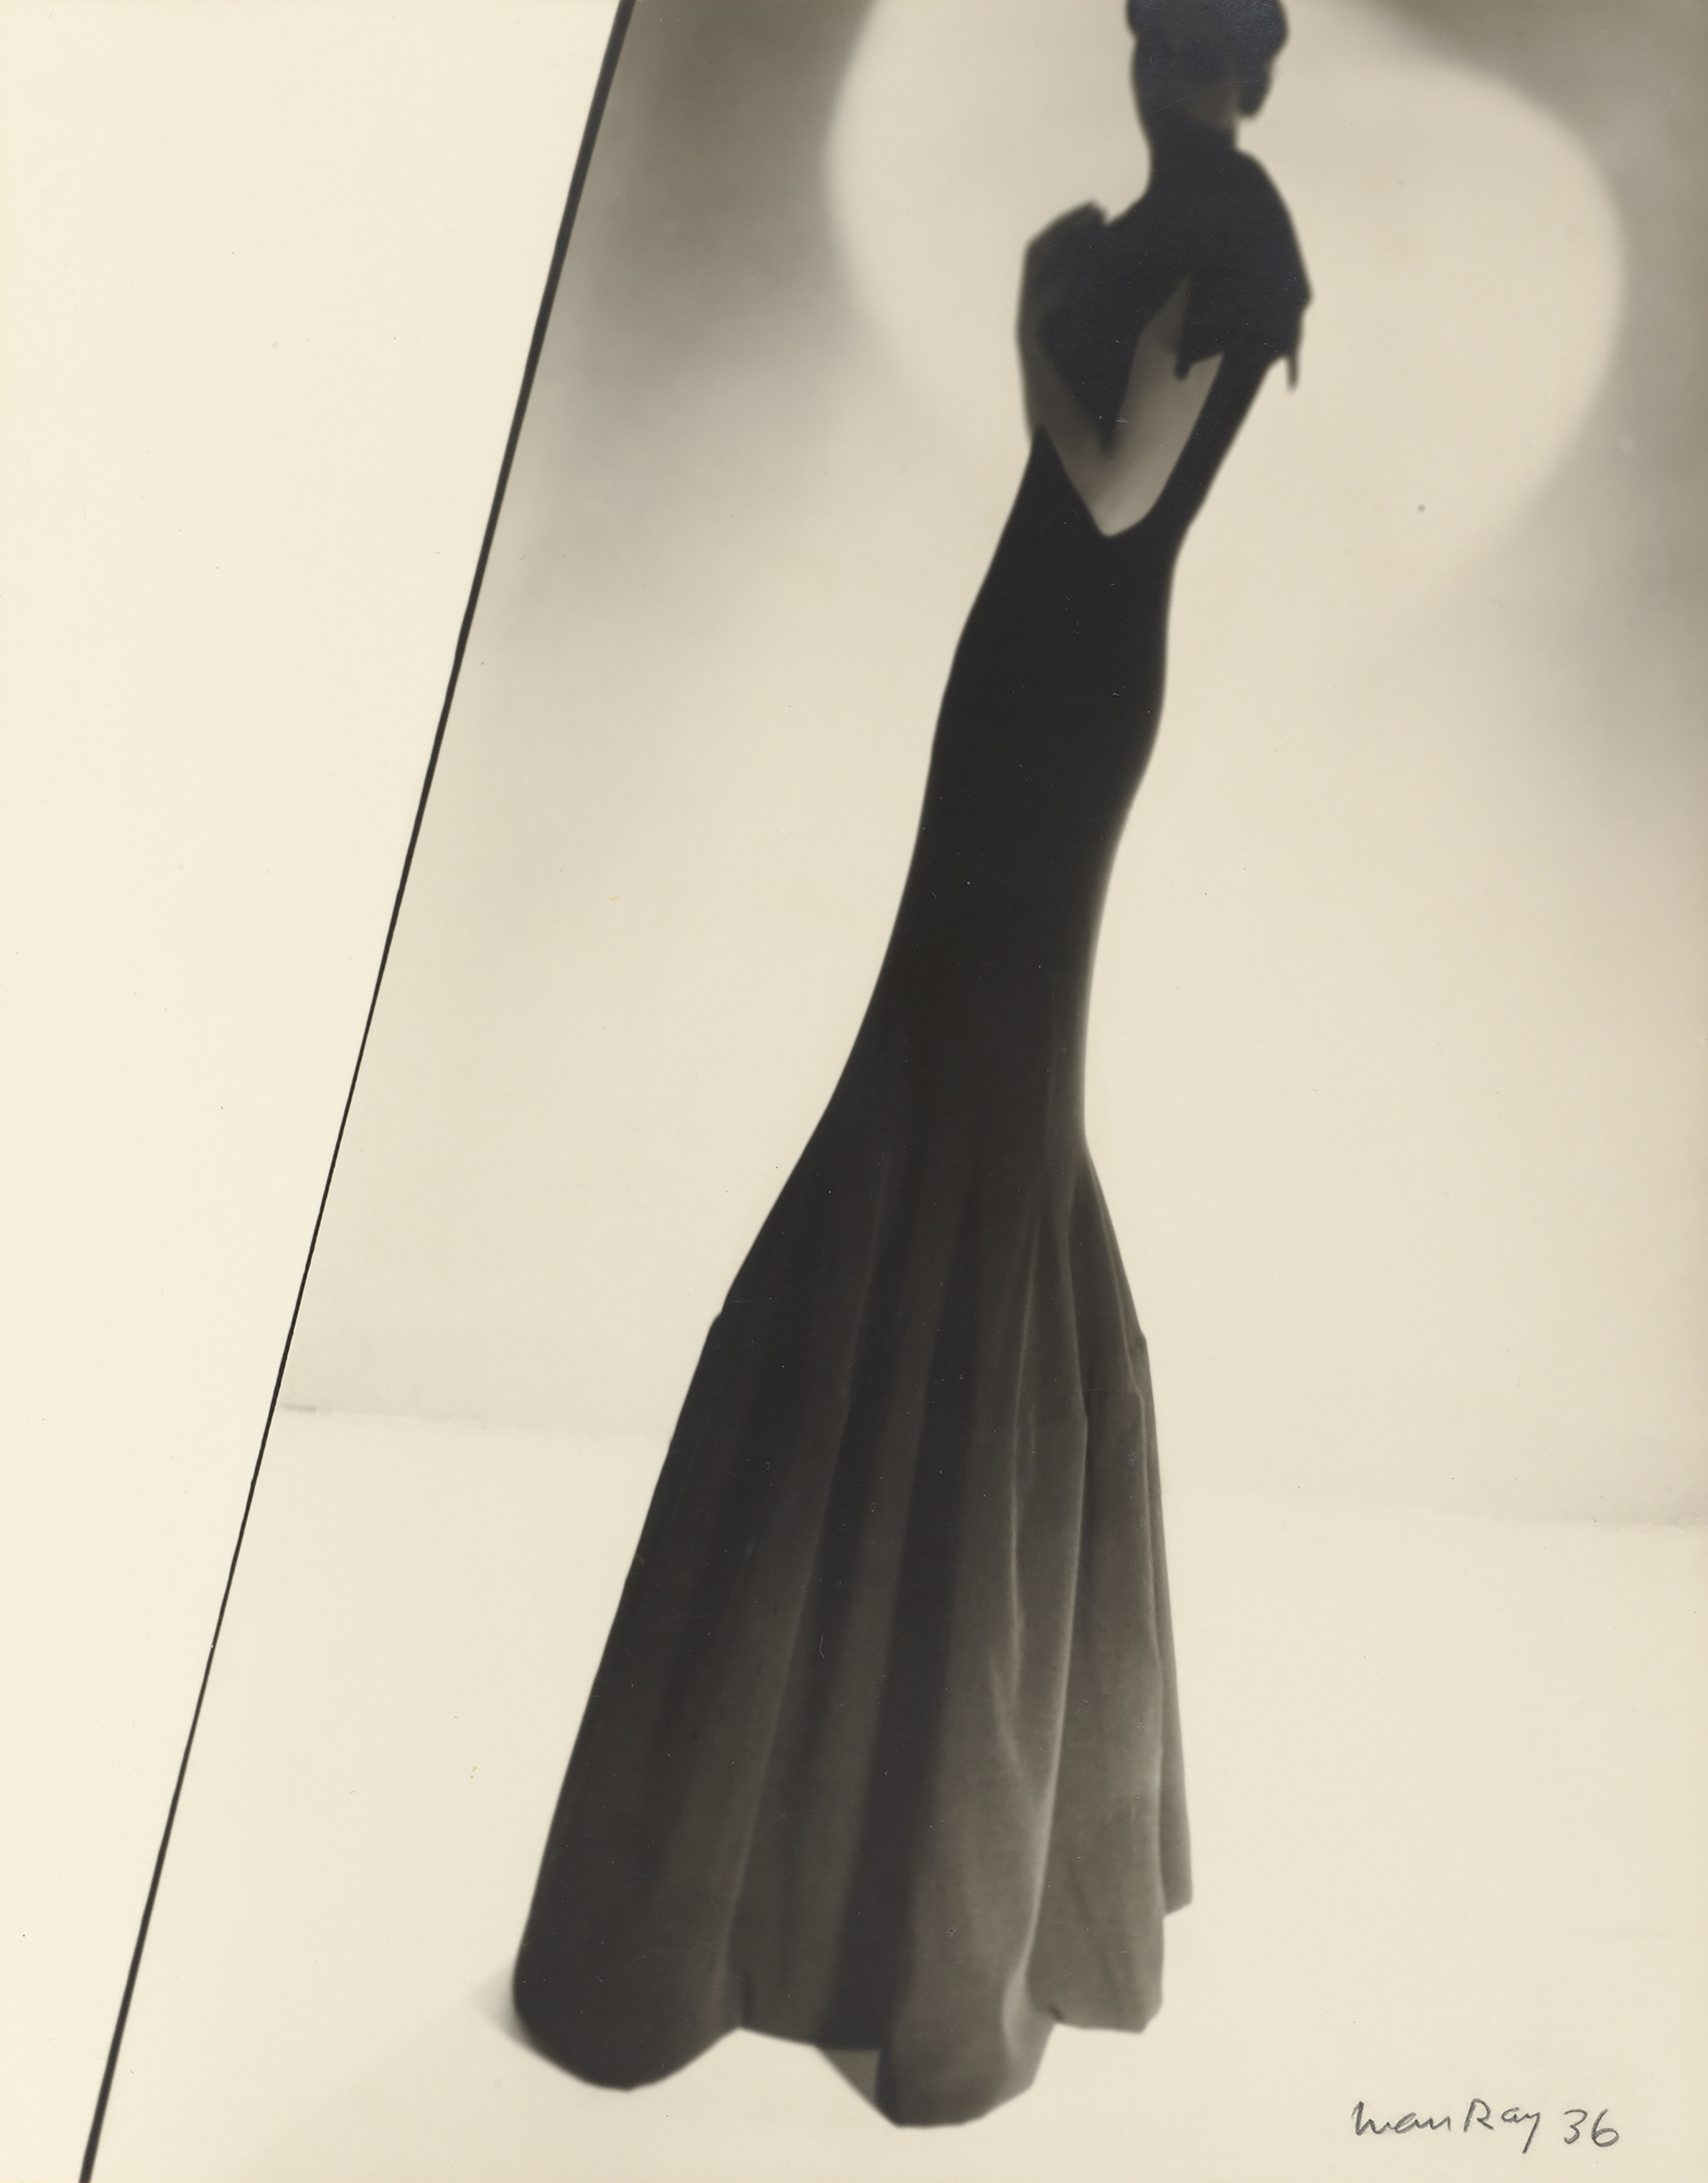 Model Wearing a Gown by Augustabernard, 1936 (Man Ray—Man Ray Trust ARS-ADAGP/J. Paul Getty Museum)